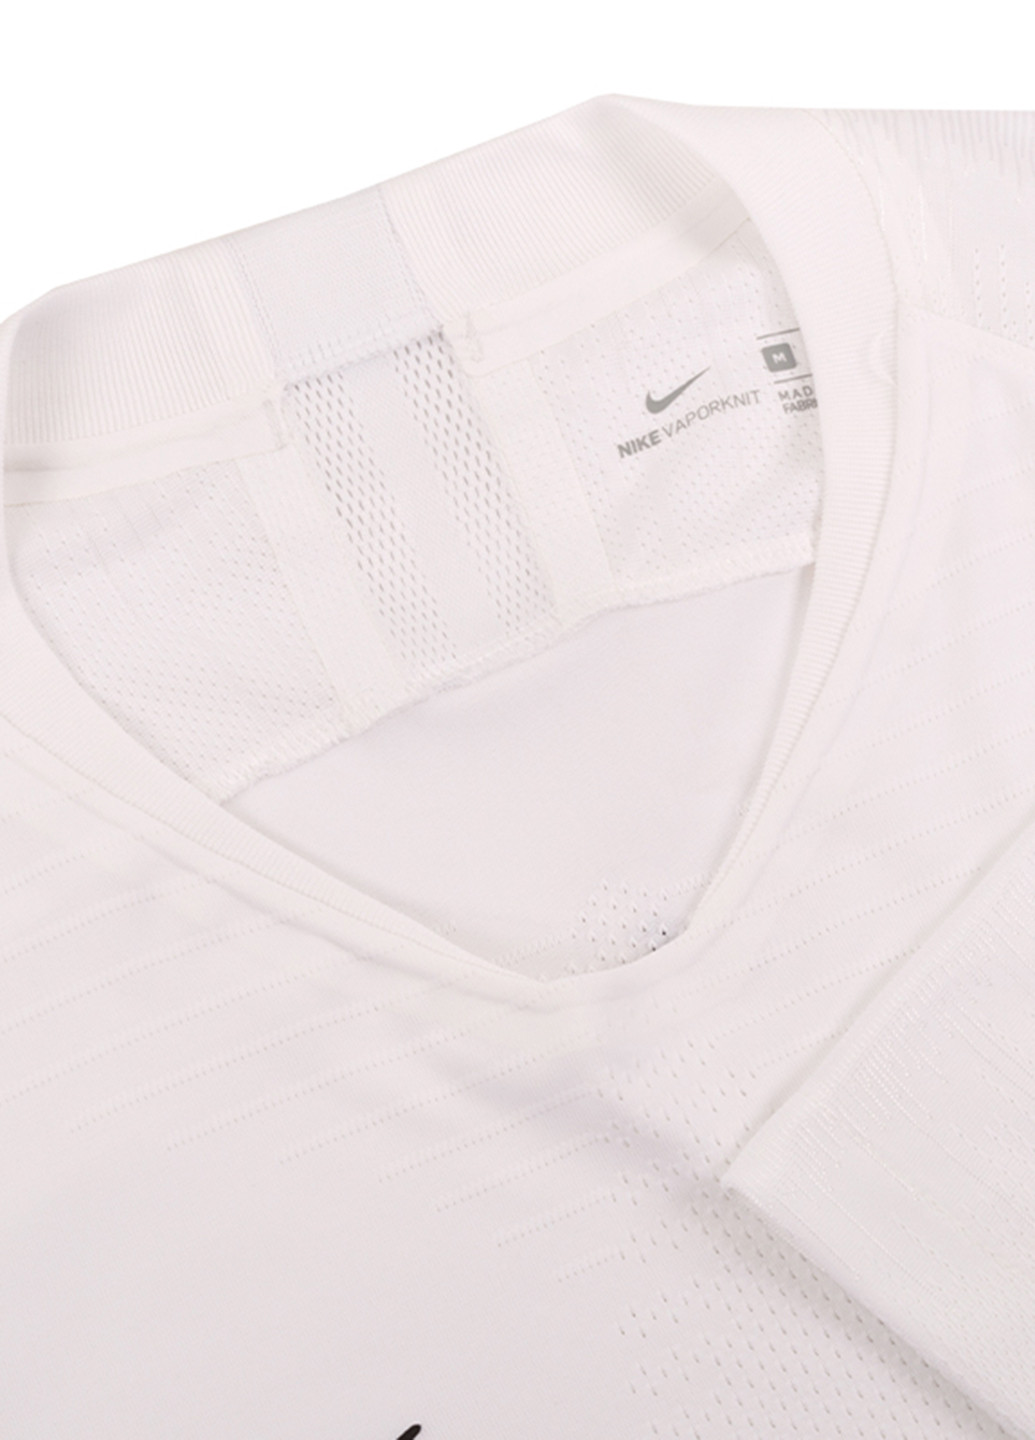 Белая футболка Nike VAPOR KNIT II JERSEY Short Sleeve